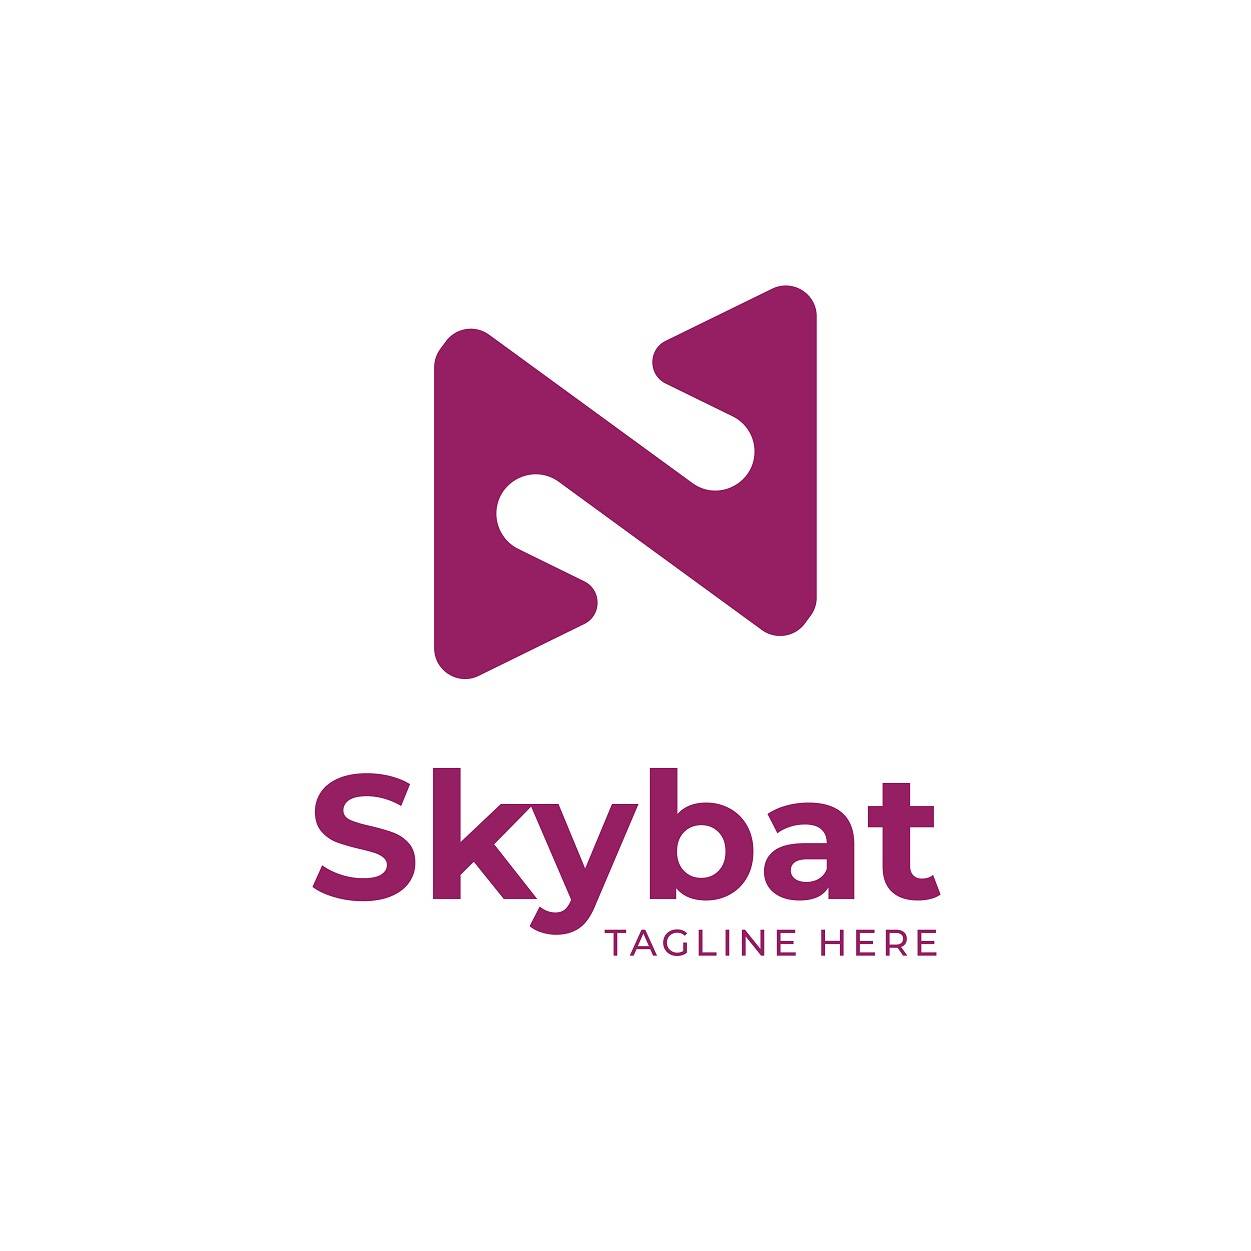 Skybat creative logo design in purple color